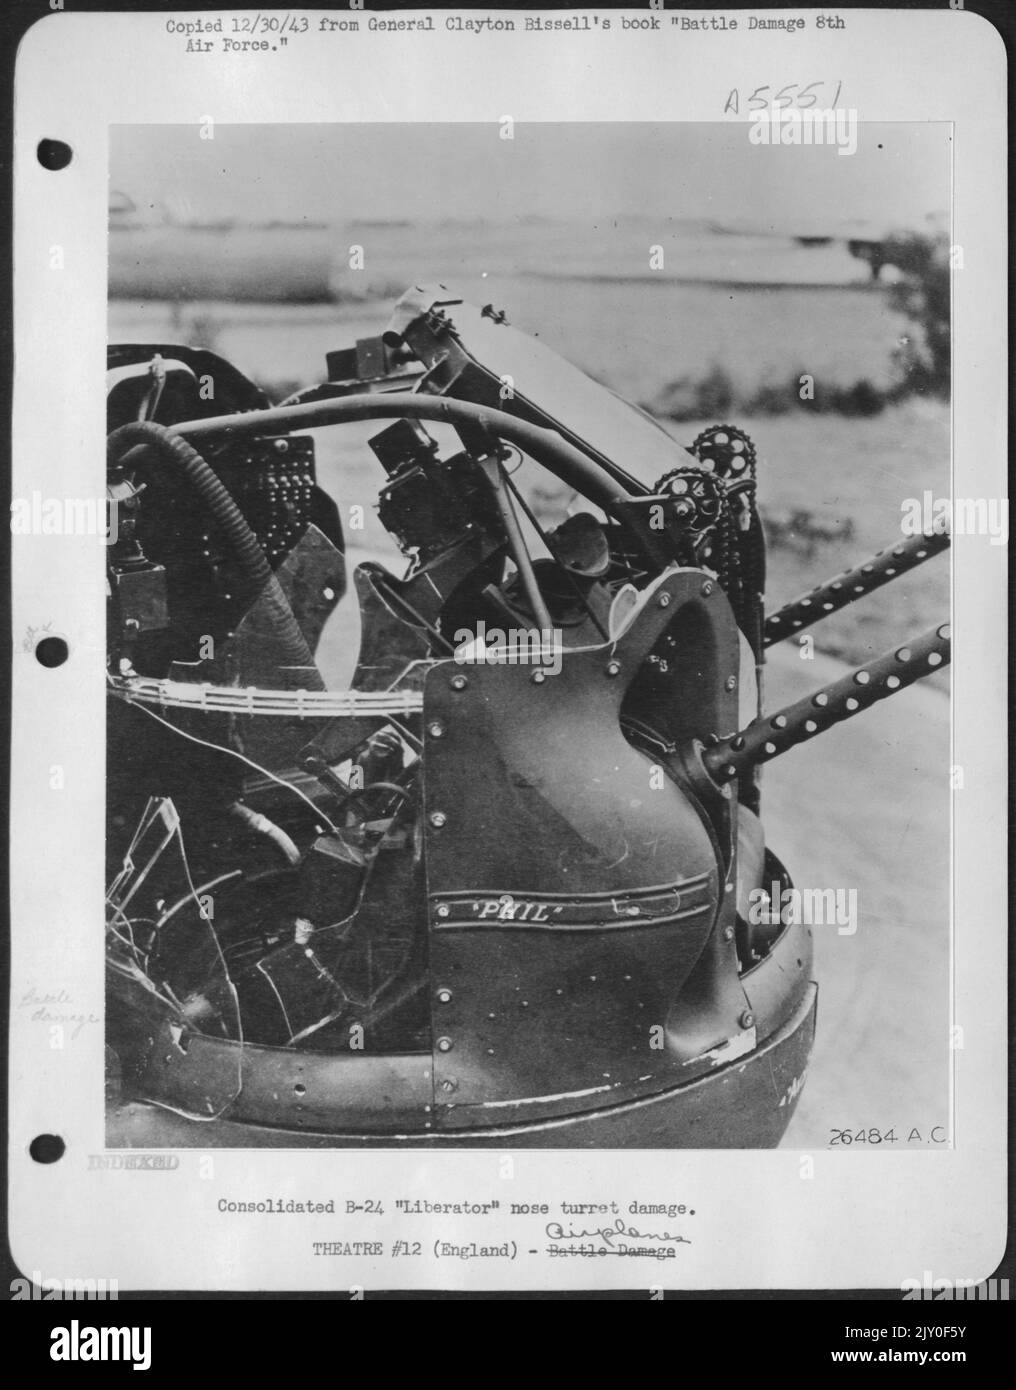 Consolidated B-24 'Liberator' nose turret damage Stock Photo